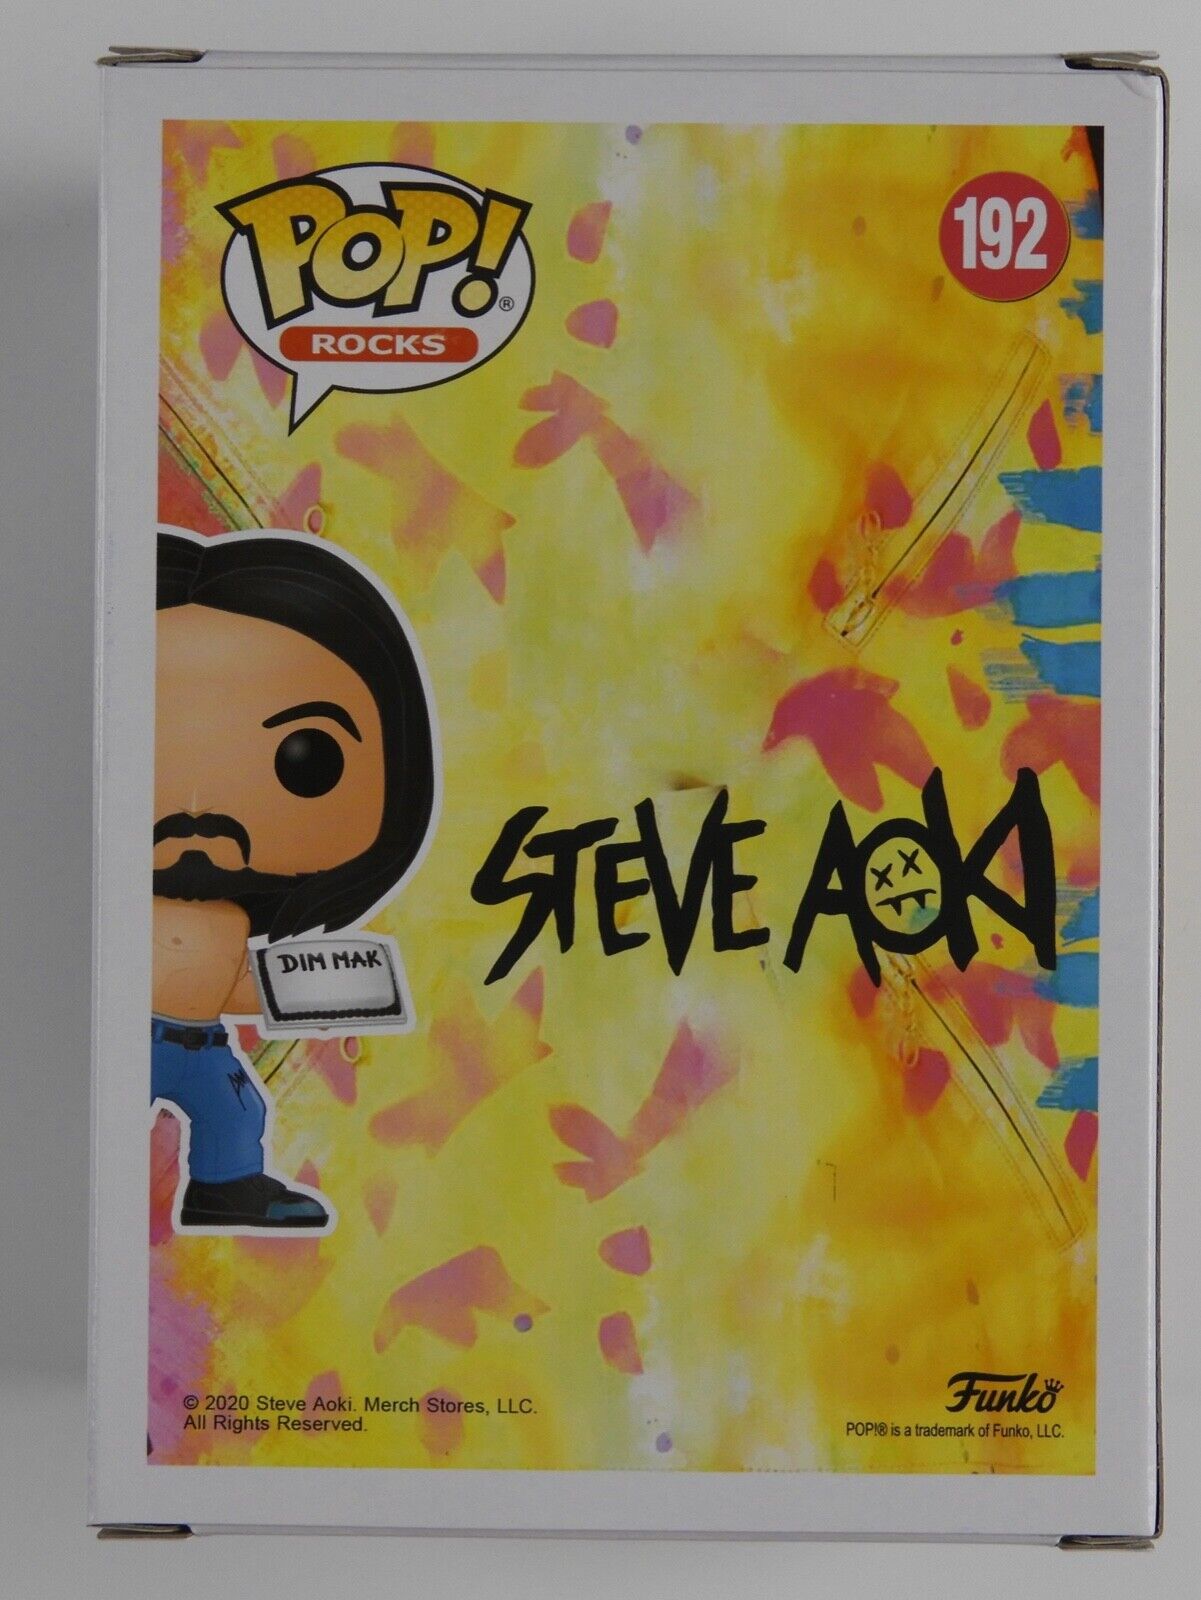 DJ Steve Aoki Signed Autograph Beckett Funko Pop 192 EDM